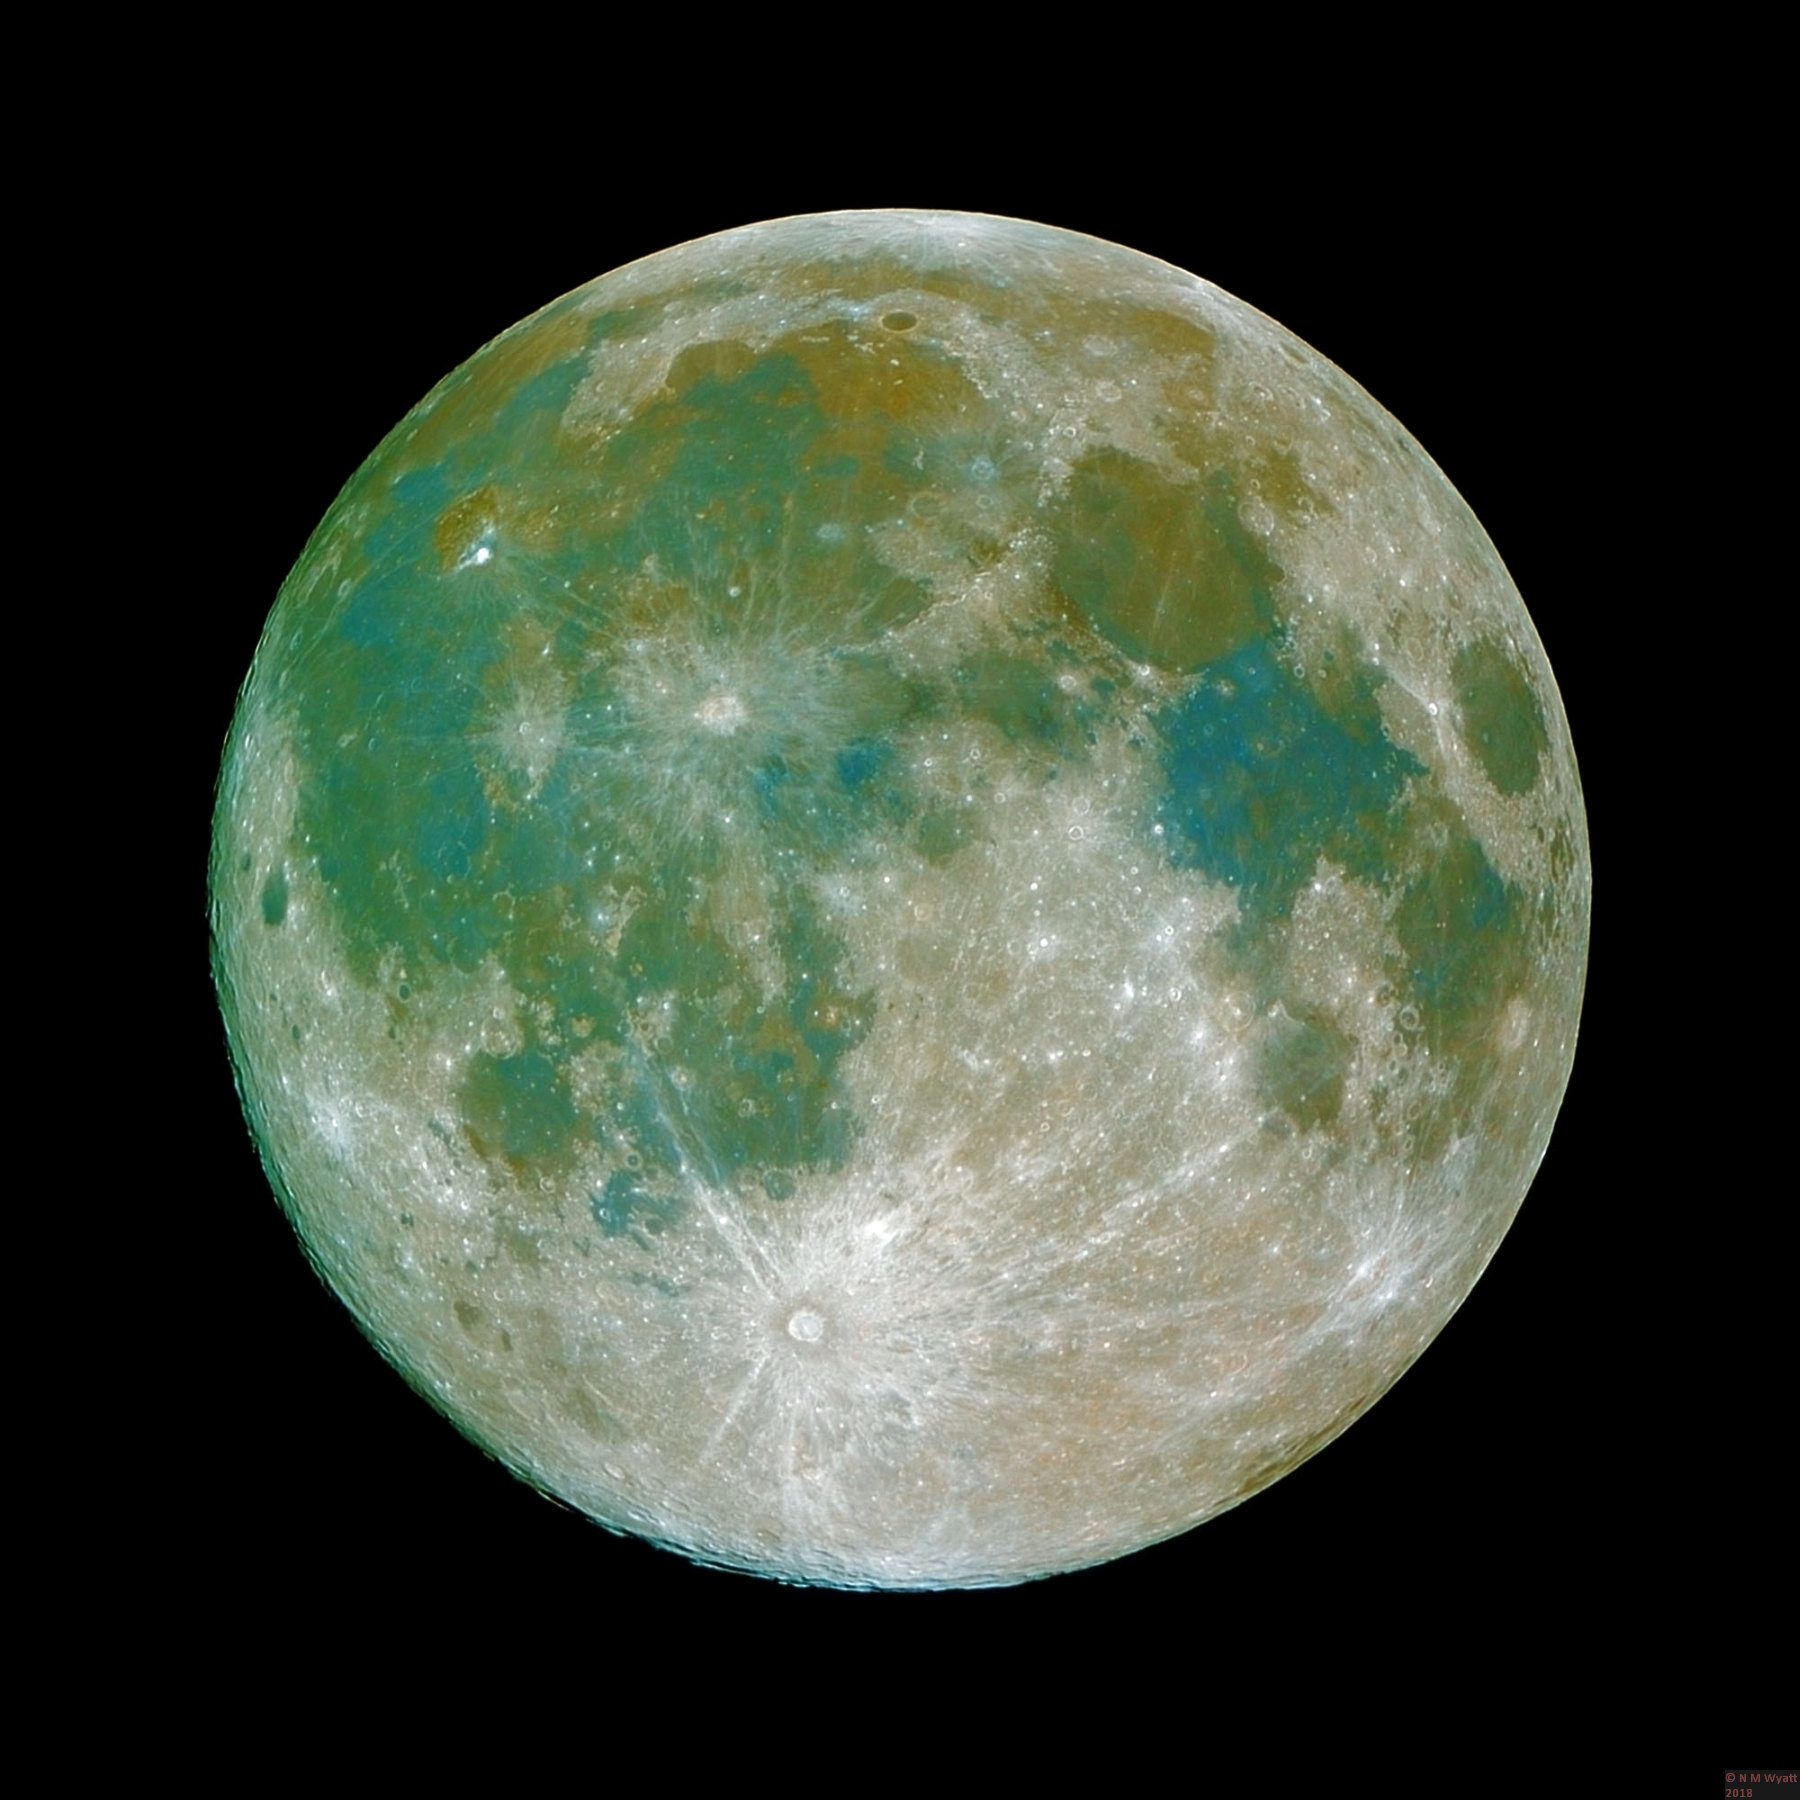 The moon in enhanced colour